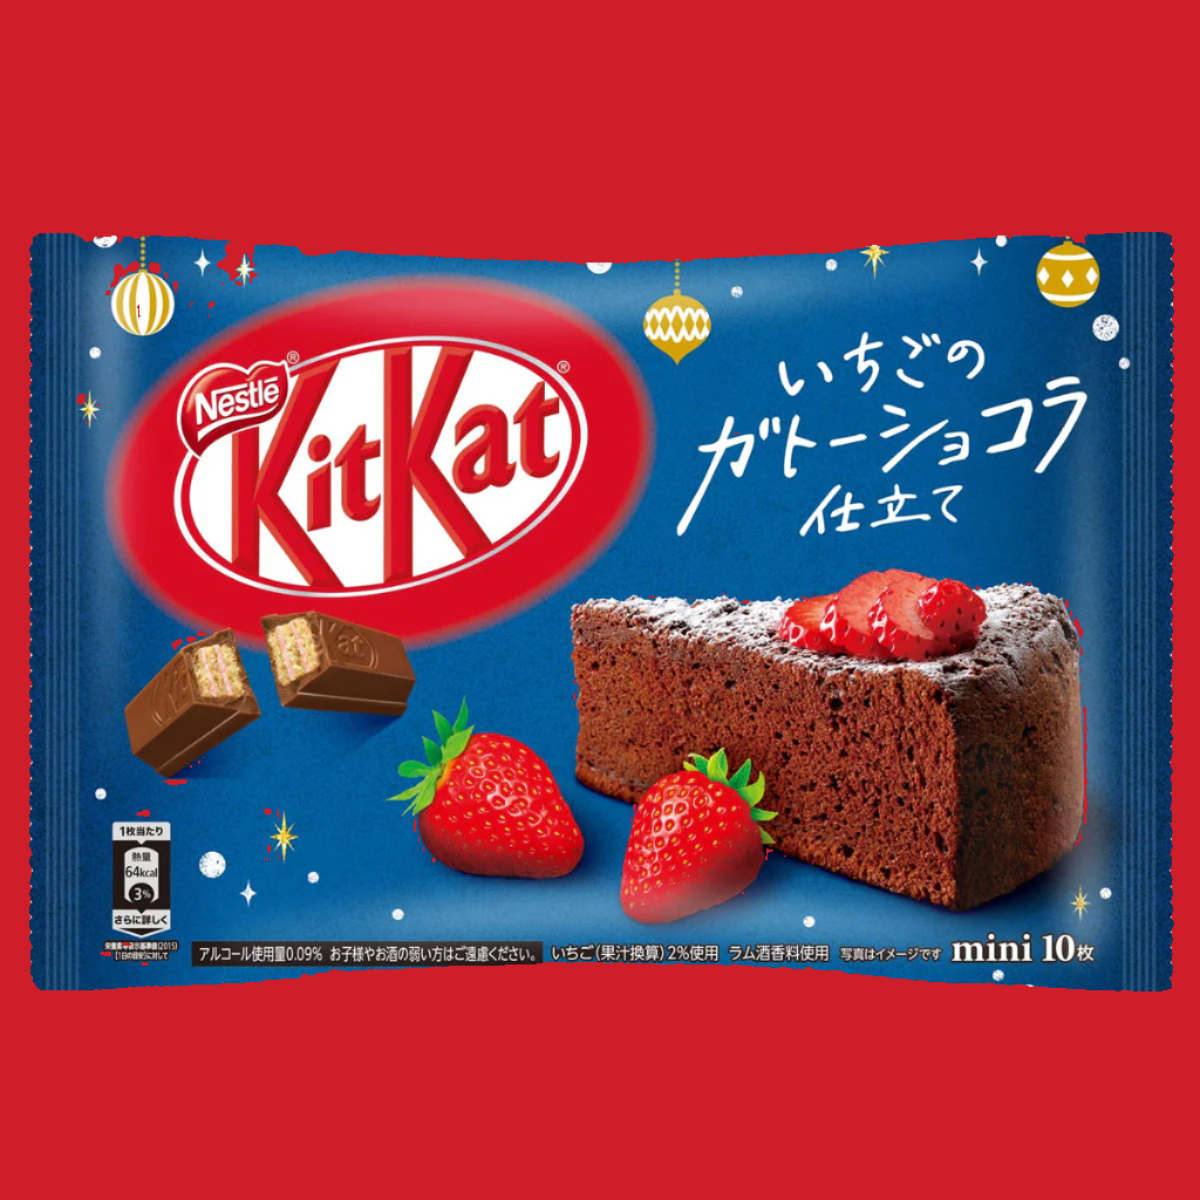 Kit Kat Strawberry Chocolate Cake Wafer 116g (Japan)